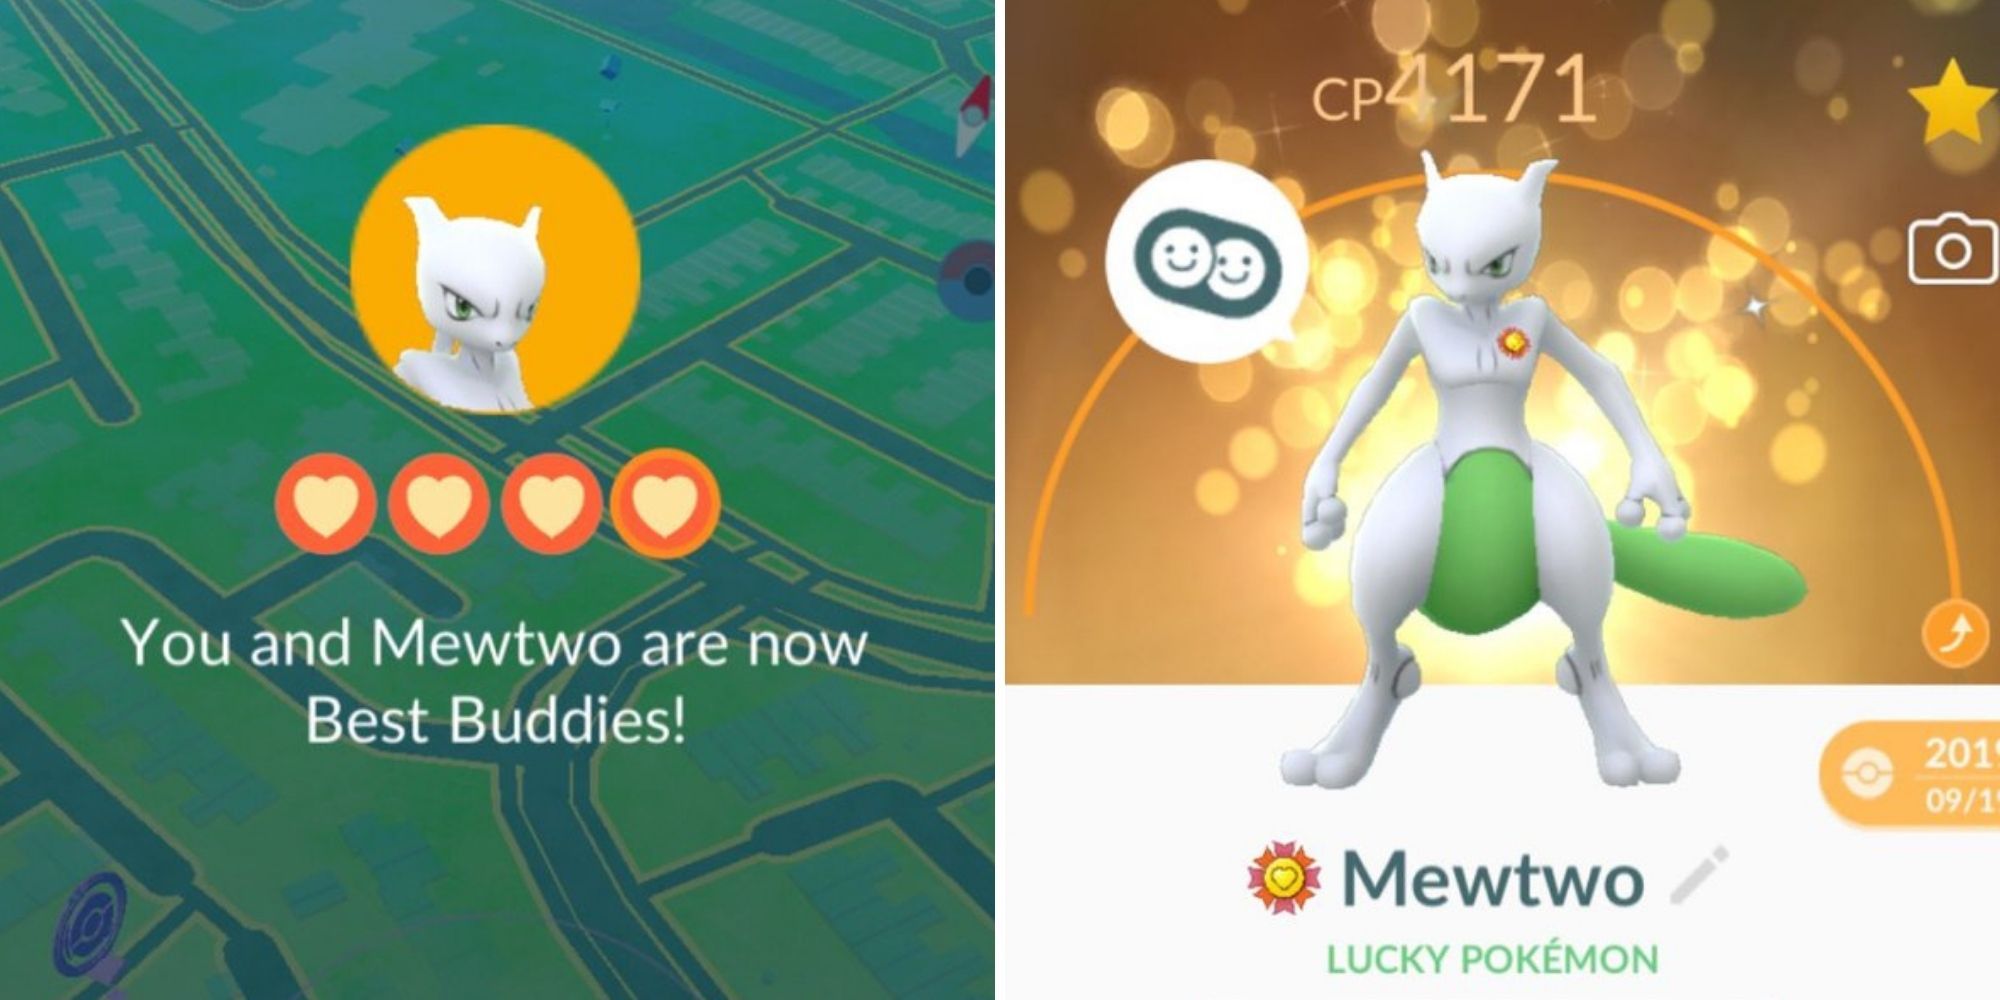 Pokemon Go - Buddy Pokemon (instructional image) (left becoming best buddies with Mewtwo) (right Mewtwo summary)